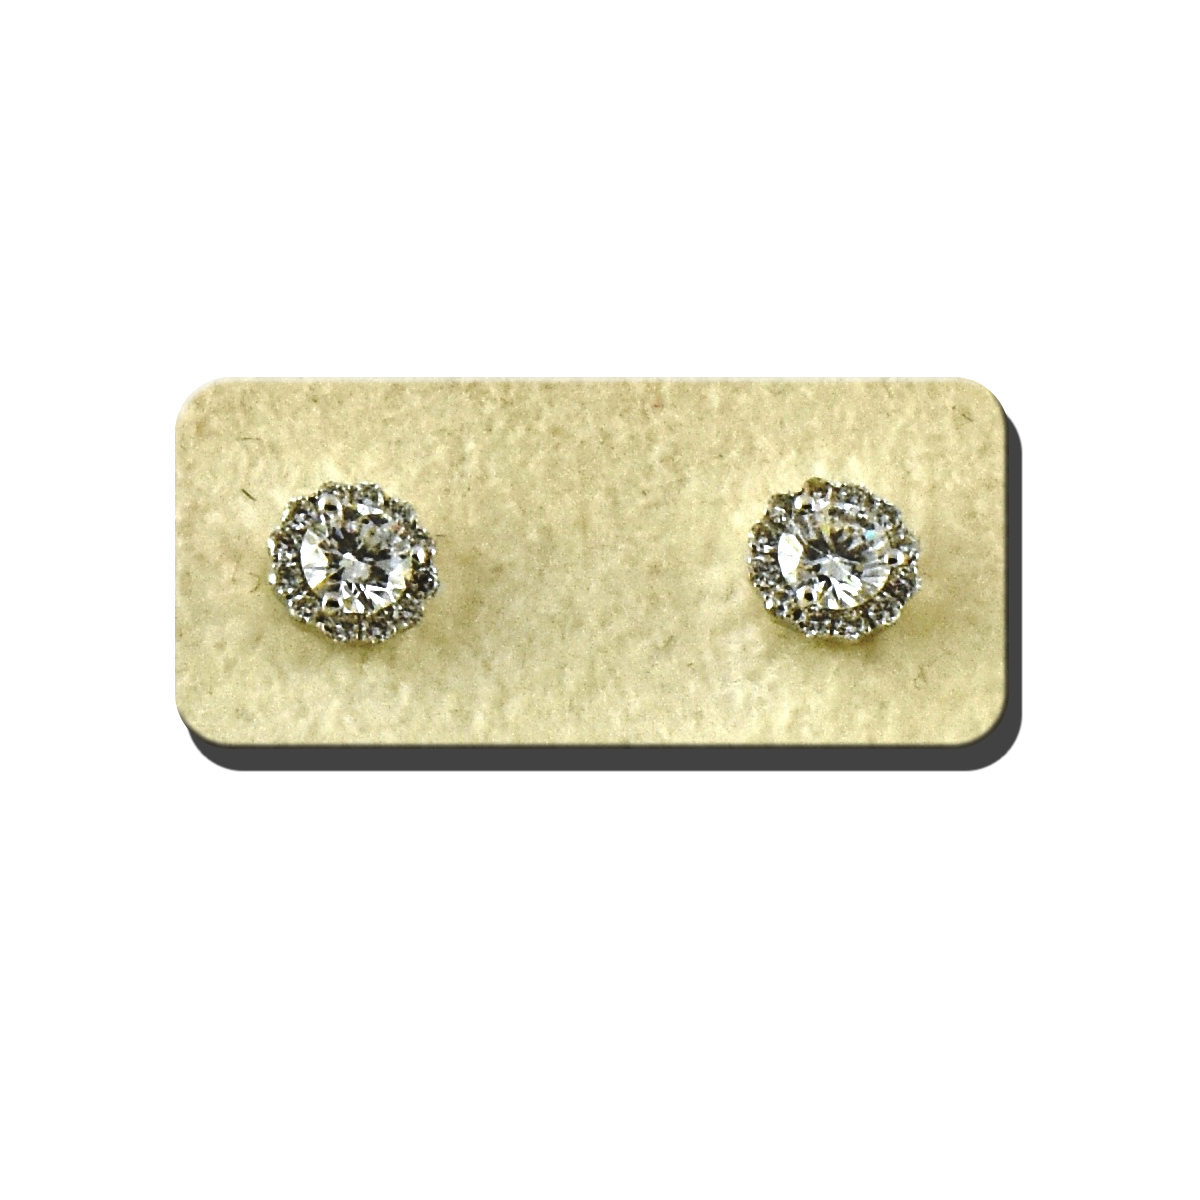 BIBIGI earrings POINT LIGHT gold 750% diamonds 0.48 Ct color F/si